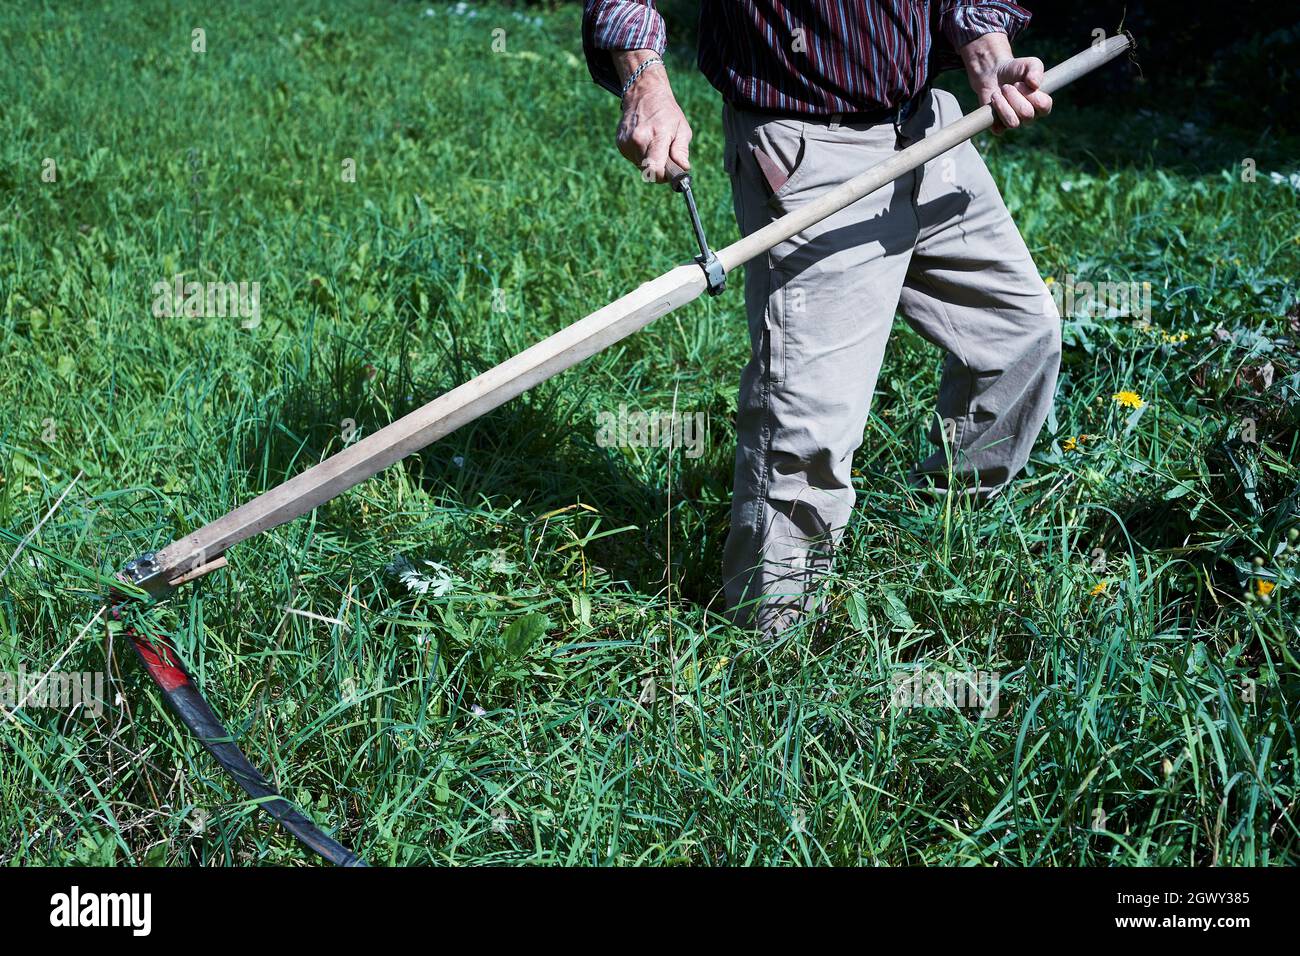 grass scythe cutting demonstration